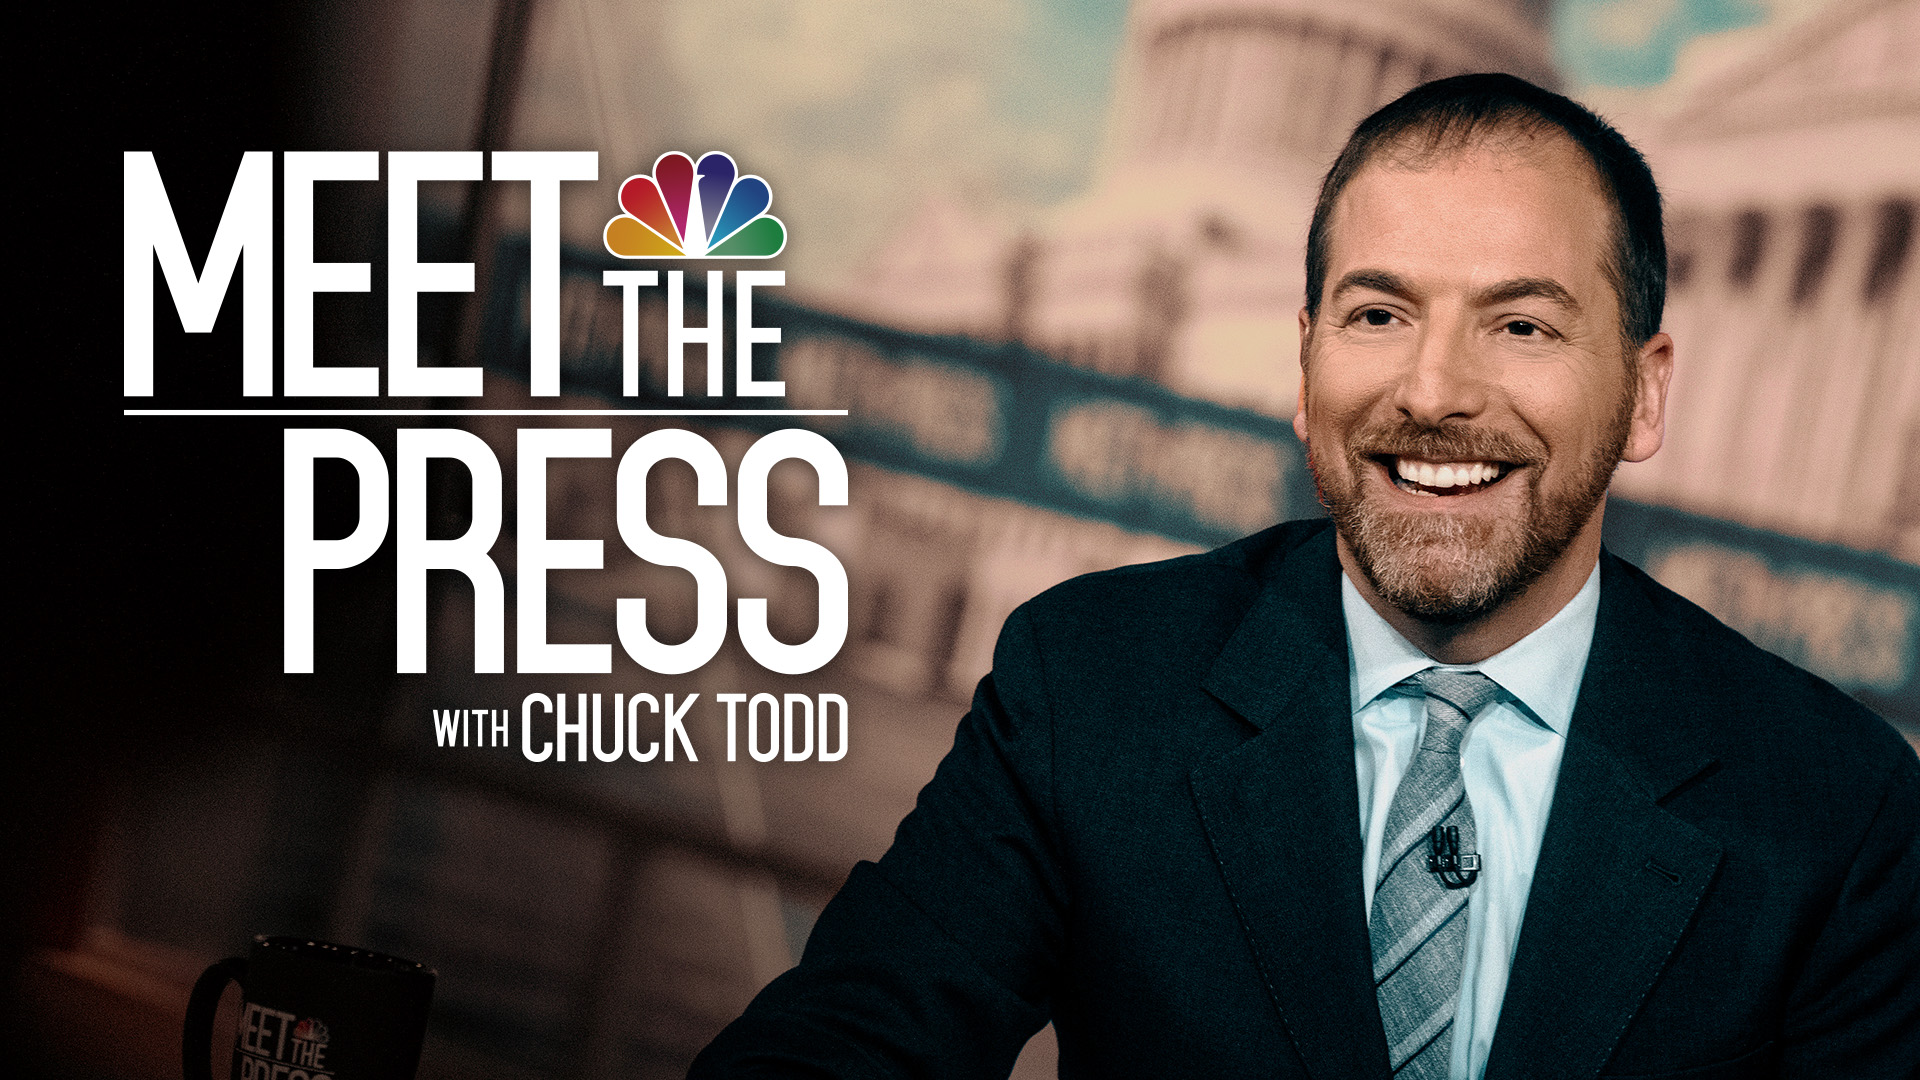 Watch Meet the Press Episodes at NBC.com